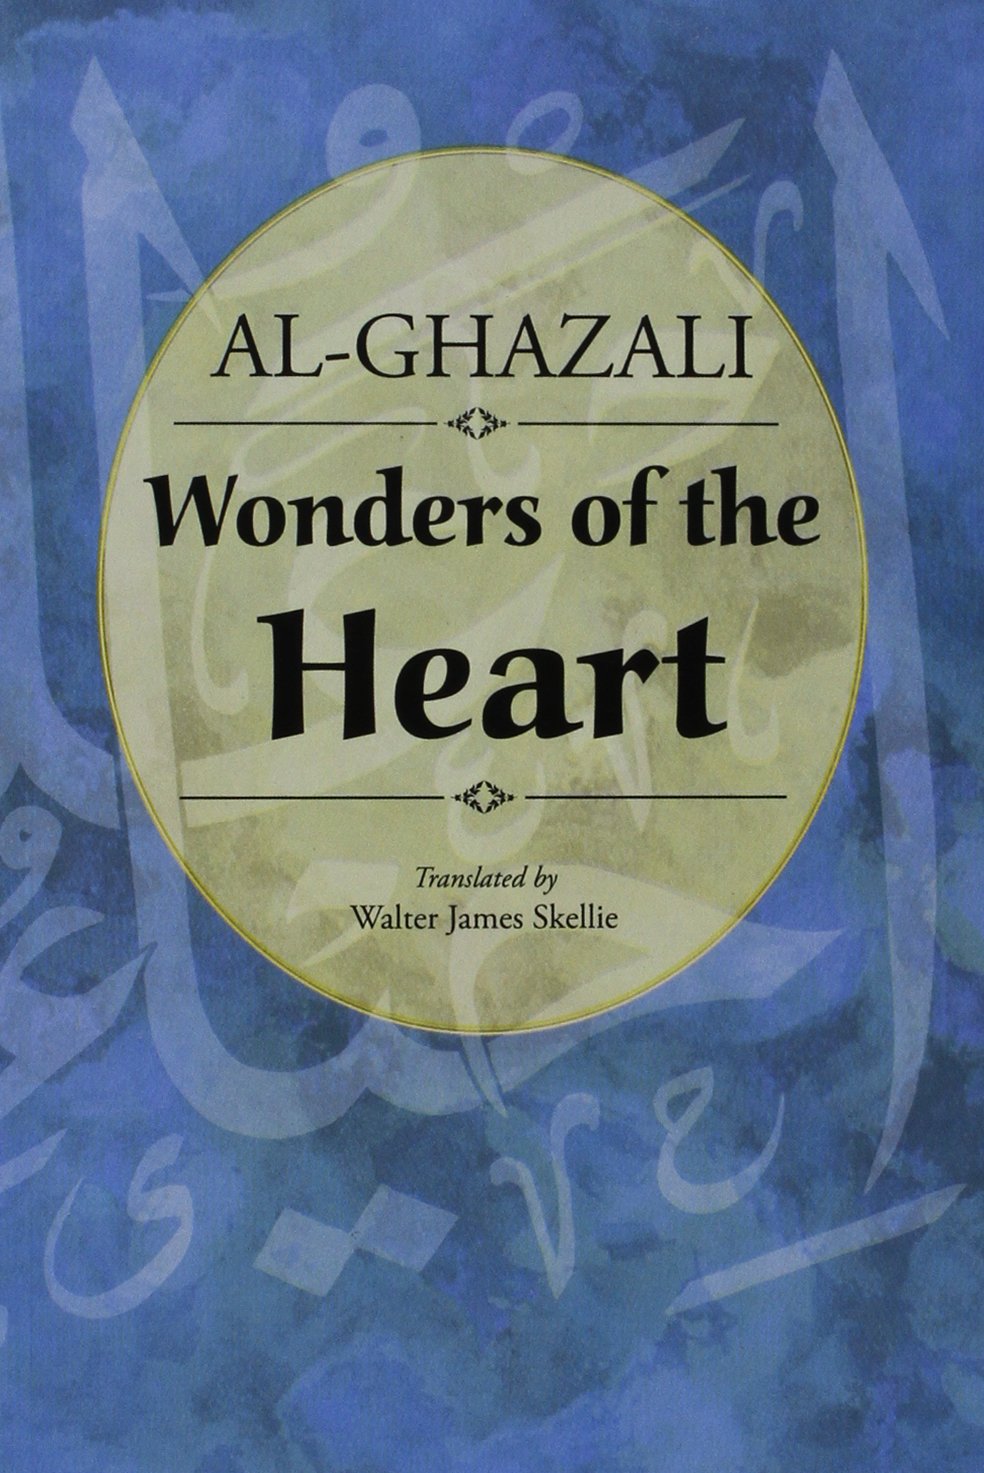 Wonders of the Heart - Al-Ghazali (Author), Walter James Skeille (Translator)